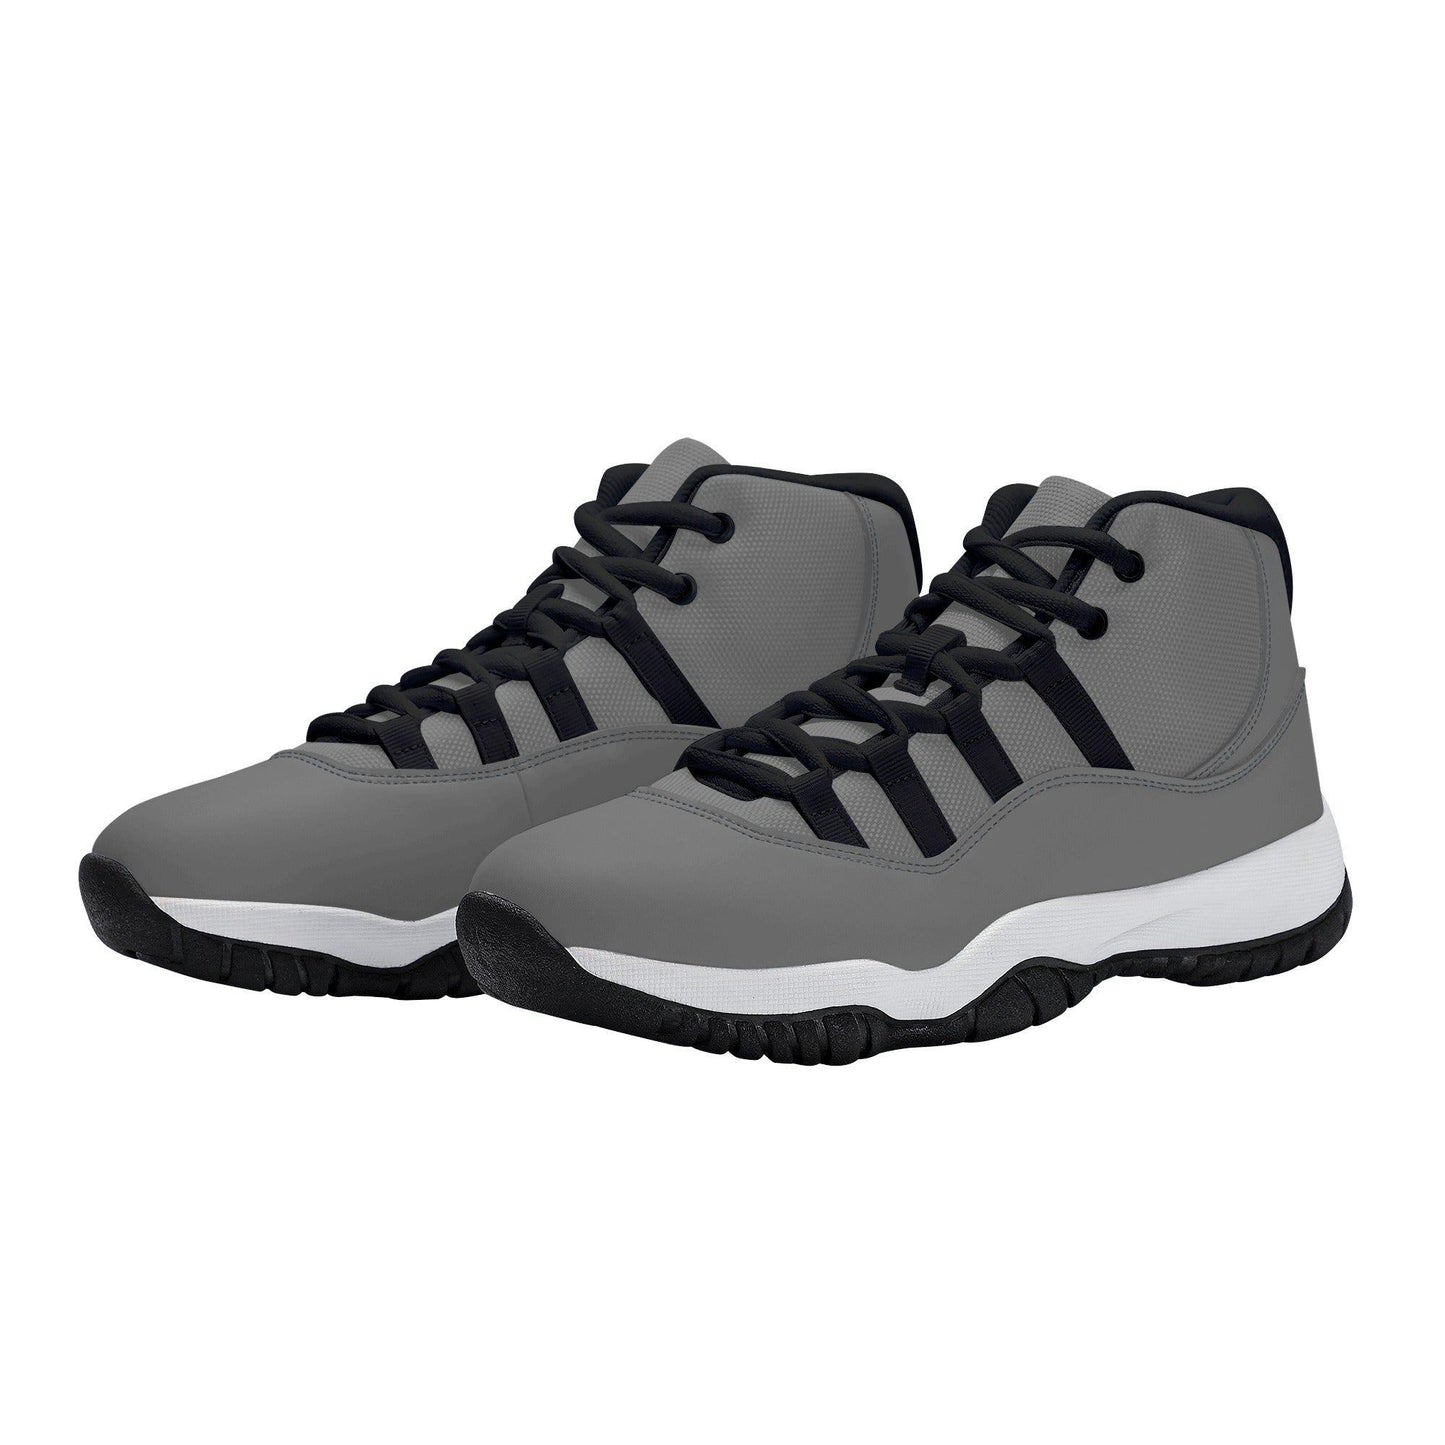 Graue High Top Damen Sneaker -- Graue High Top Damen Sneaker - undefined Sneaker | JLR Design